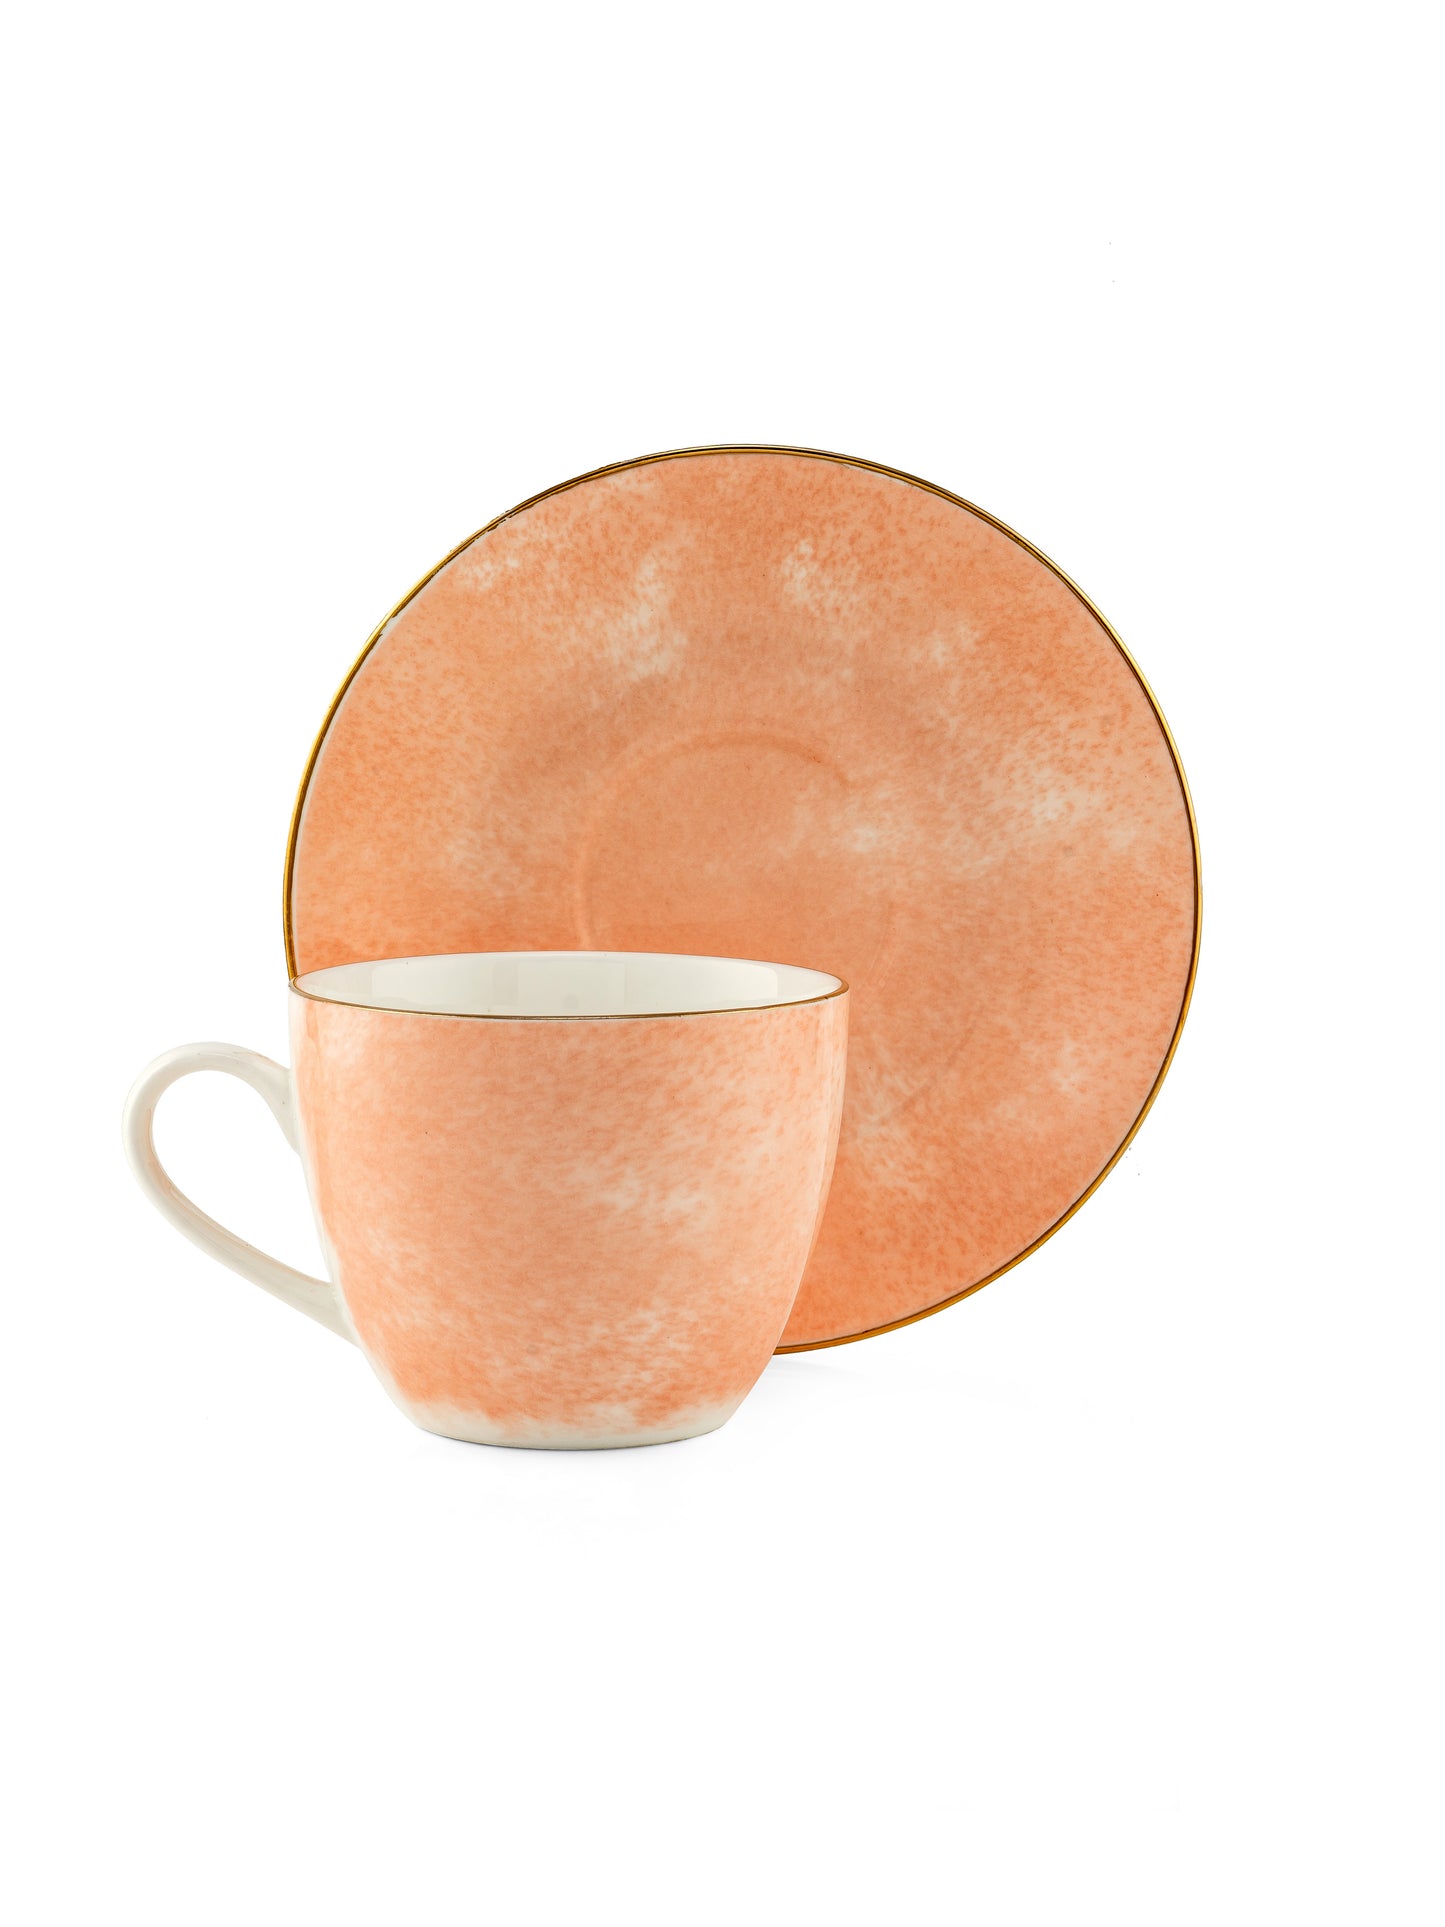 Cream Paradise Cup & Saucer, 210ml, Set of 12 (6 Cups + 6 Saucers) (P502)